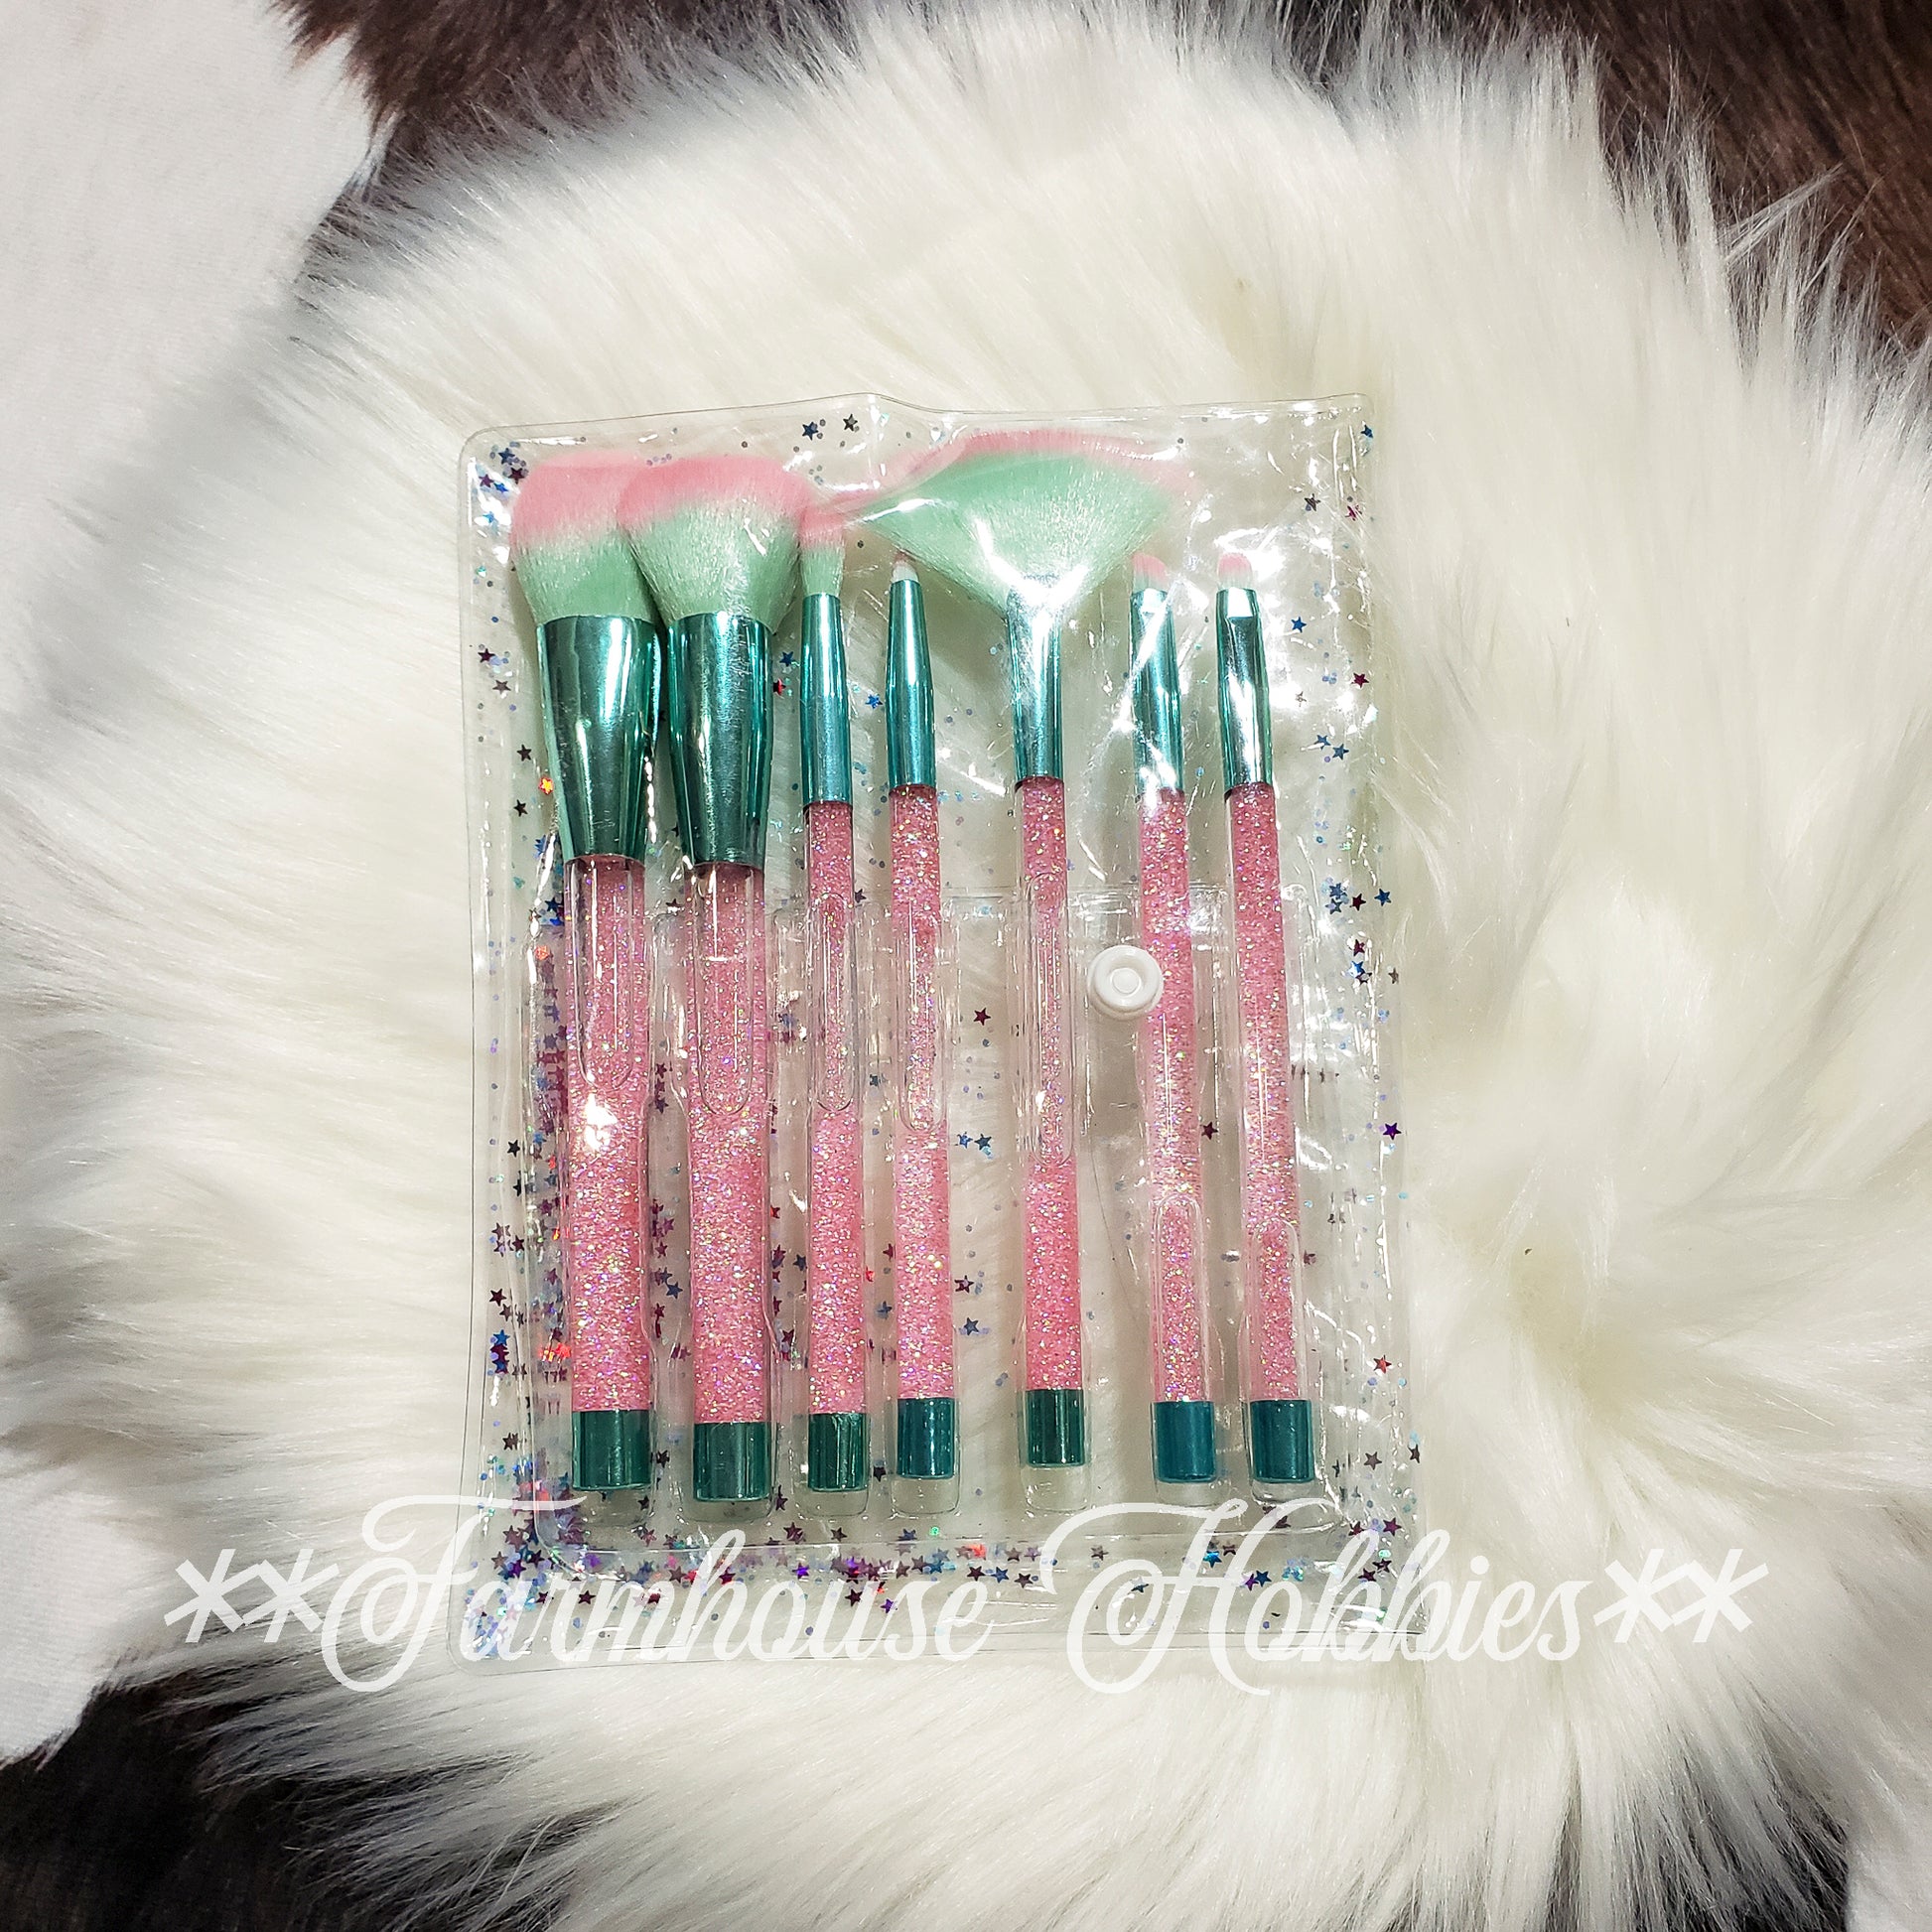 Teal & Pink Makeup Brush Home Decor/Accessories Farmhouse Hobbies   